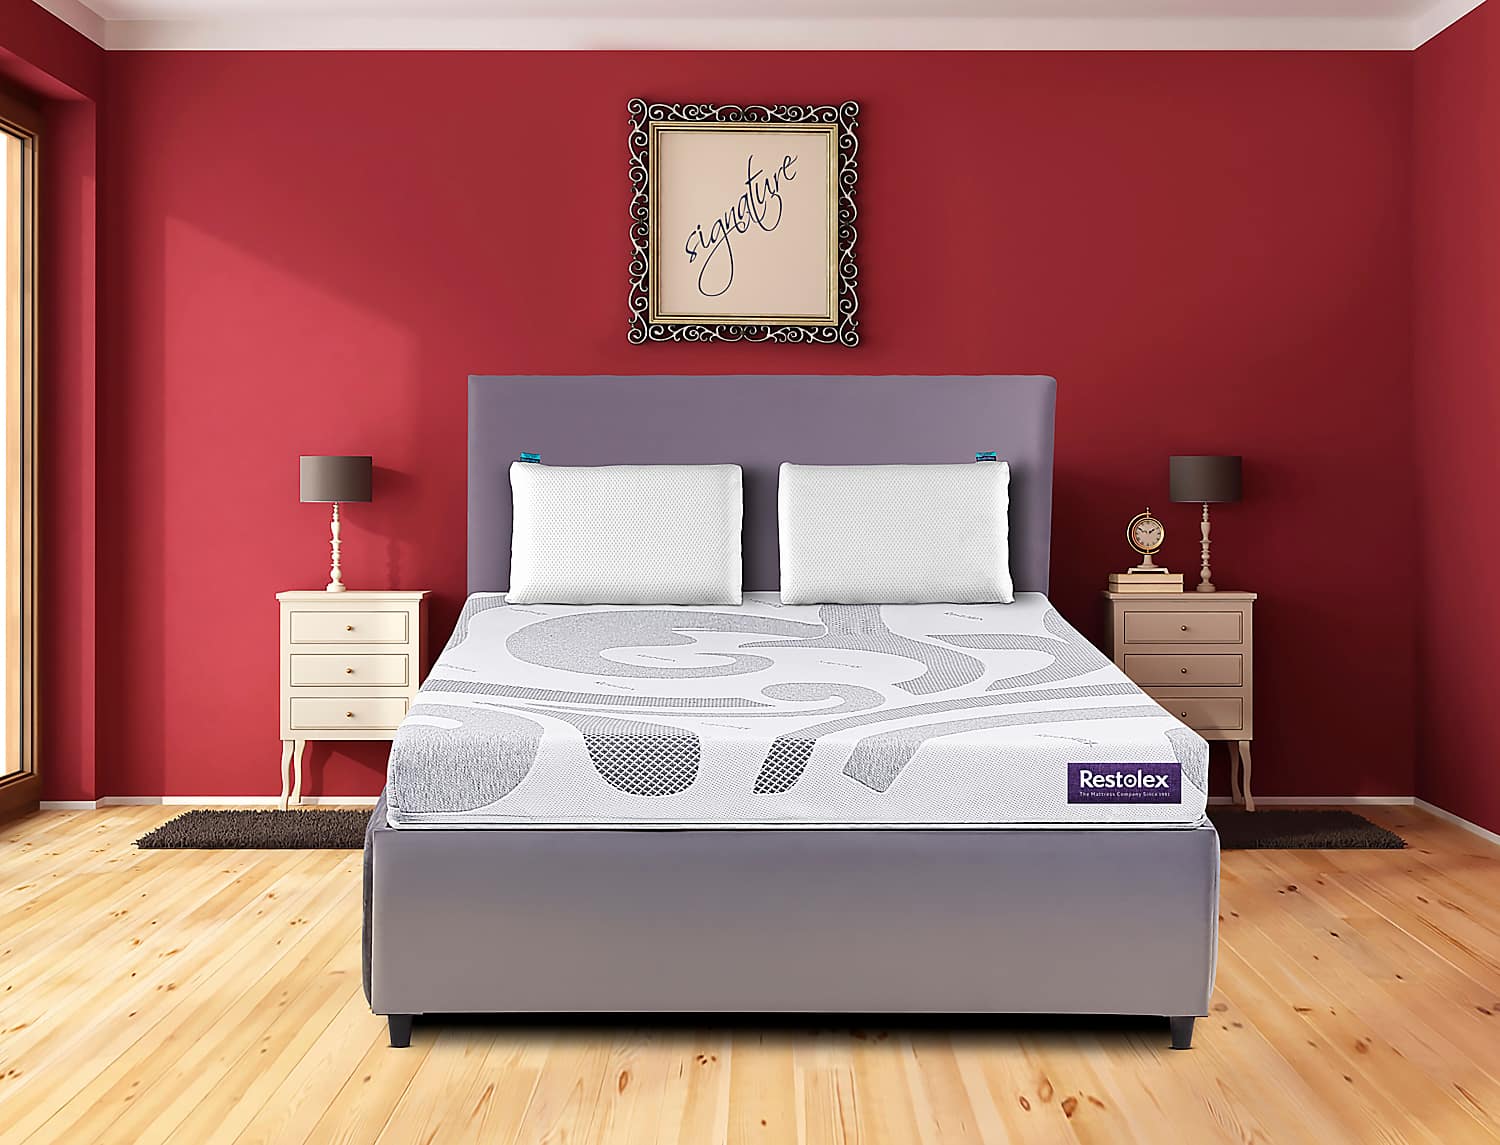 restolex memory foam mattress price